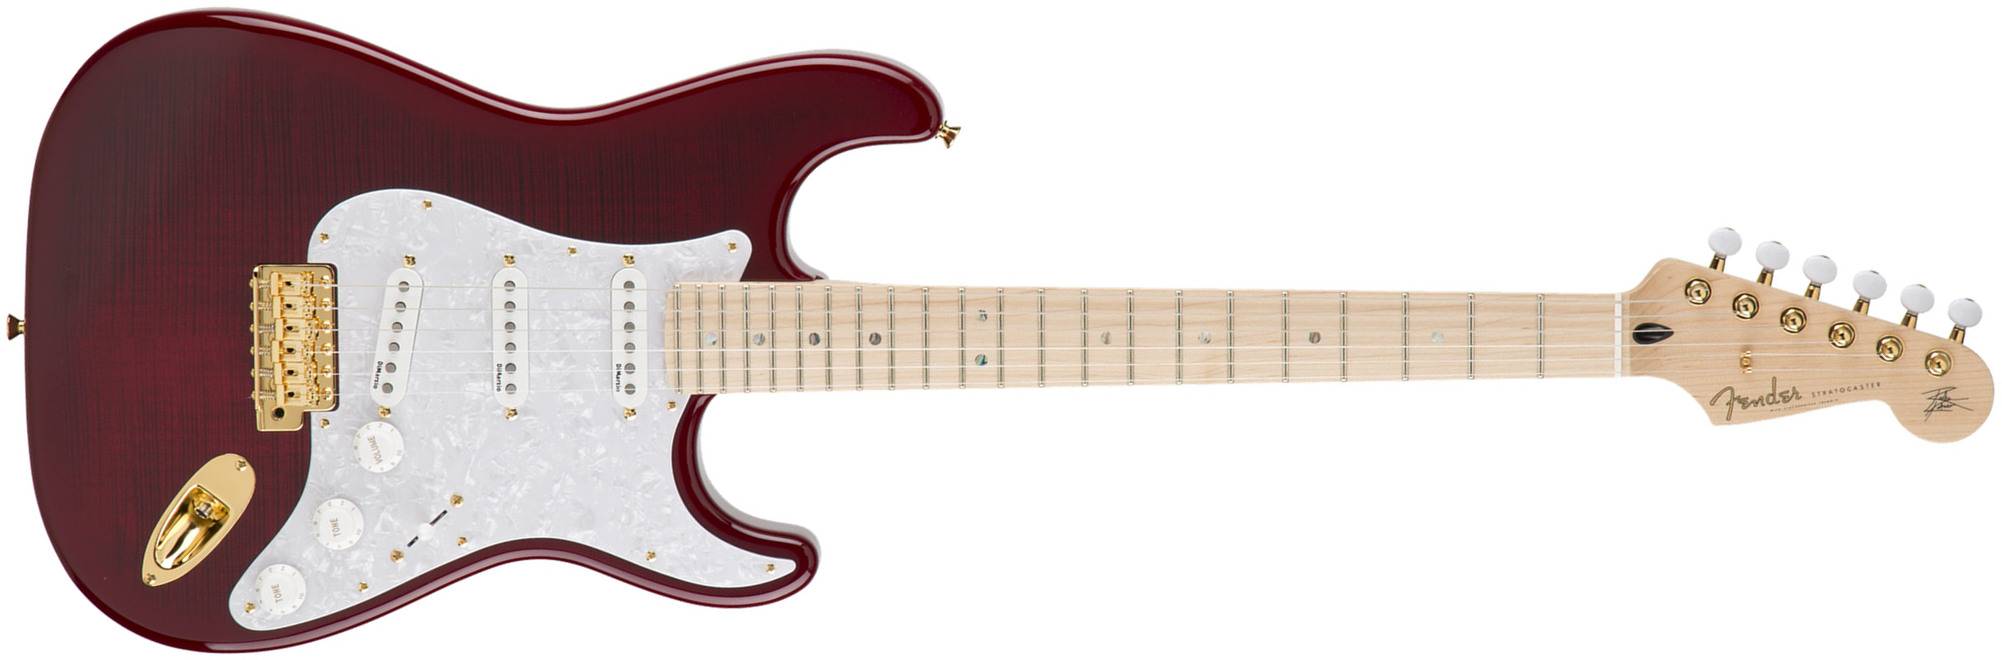 Fender Richie Kotzen Strat Japan Ltd 3s Mn - Transparent Red Burst - Str shape electric guitar - Main picture